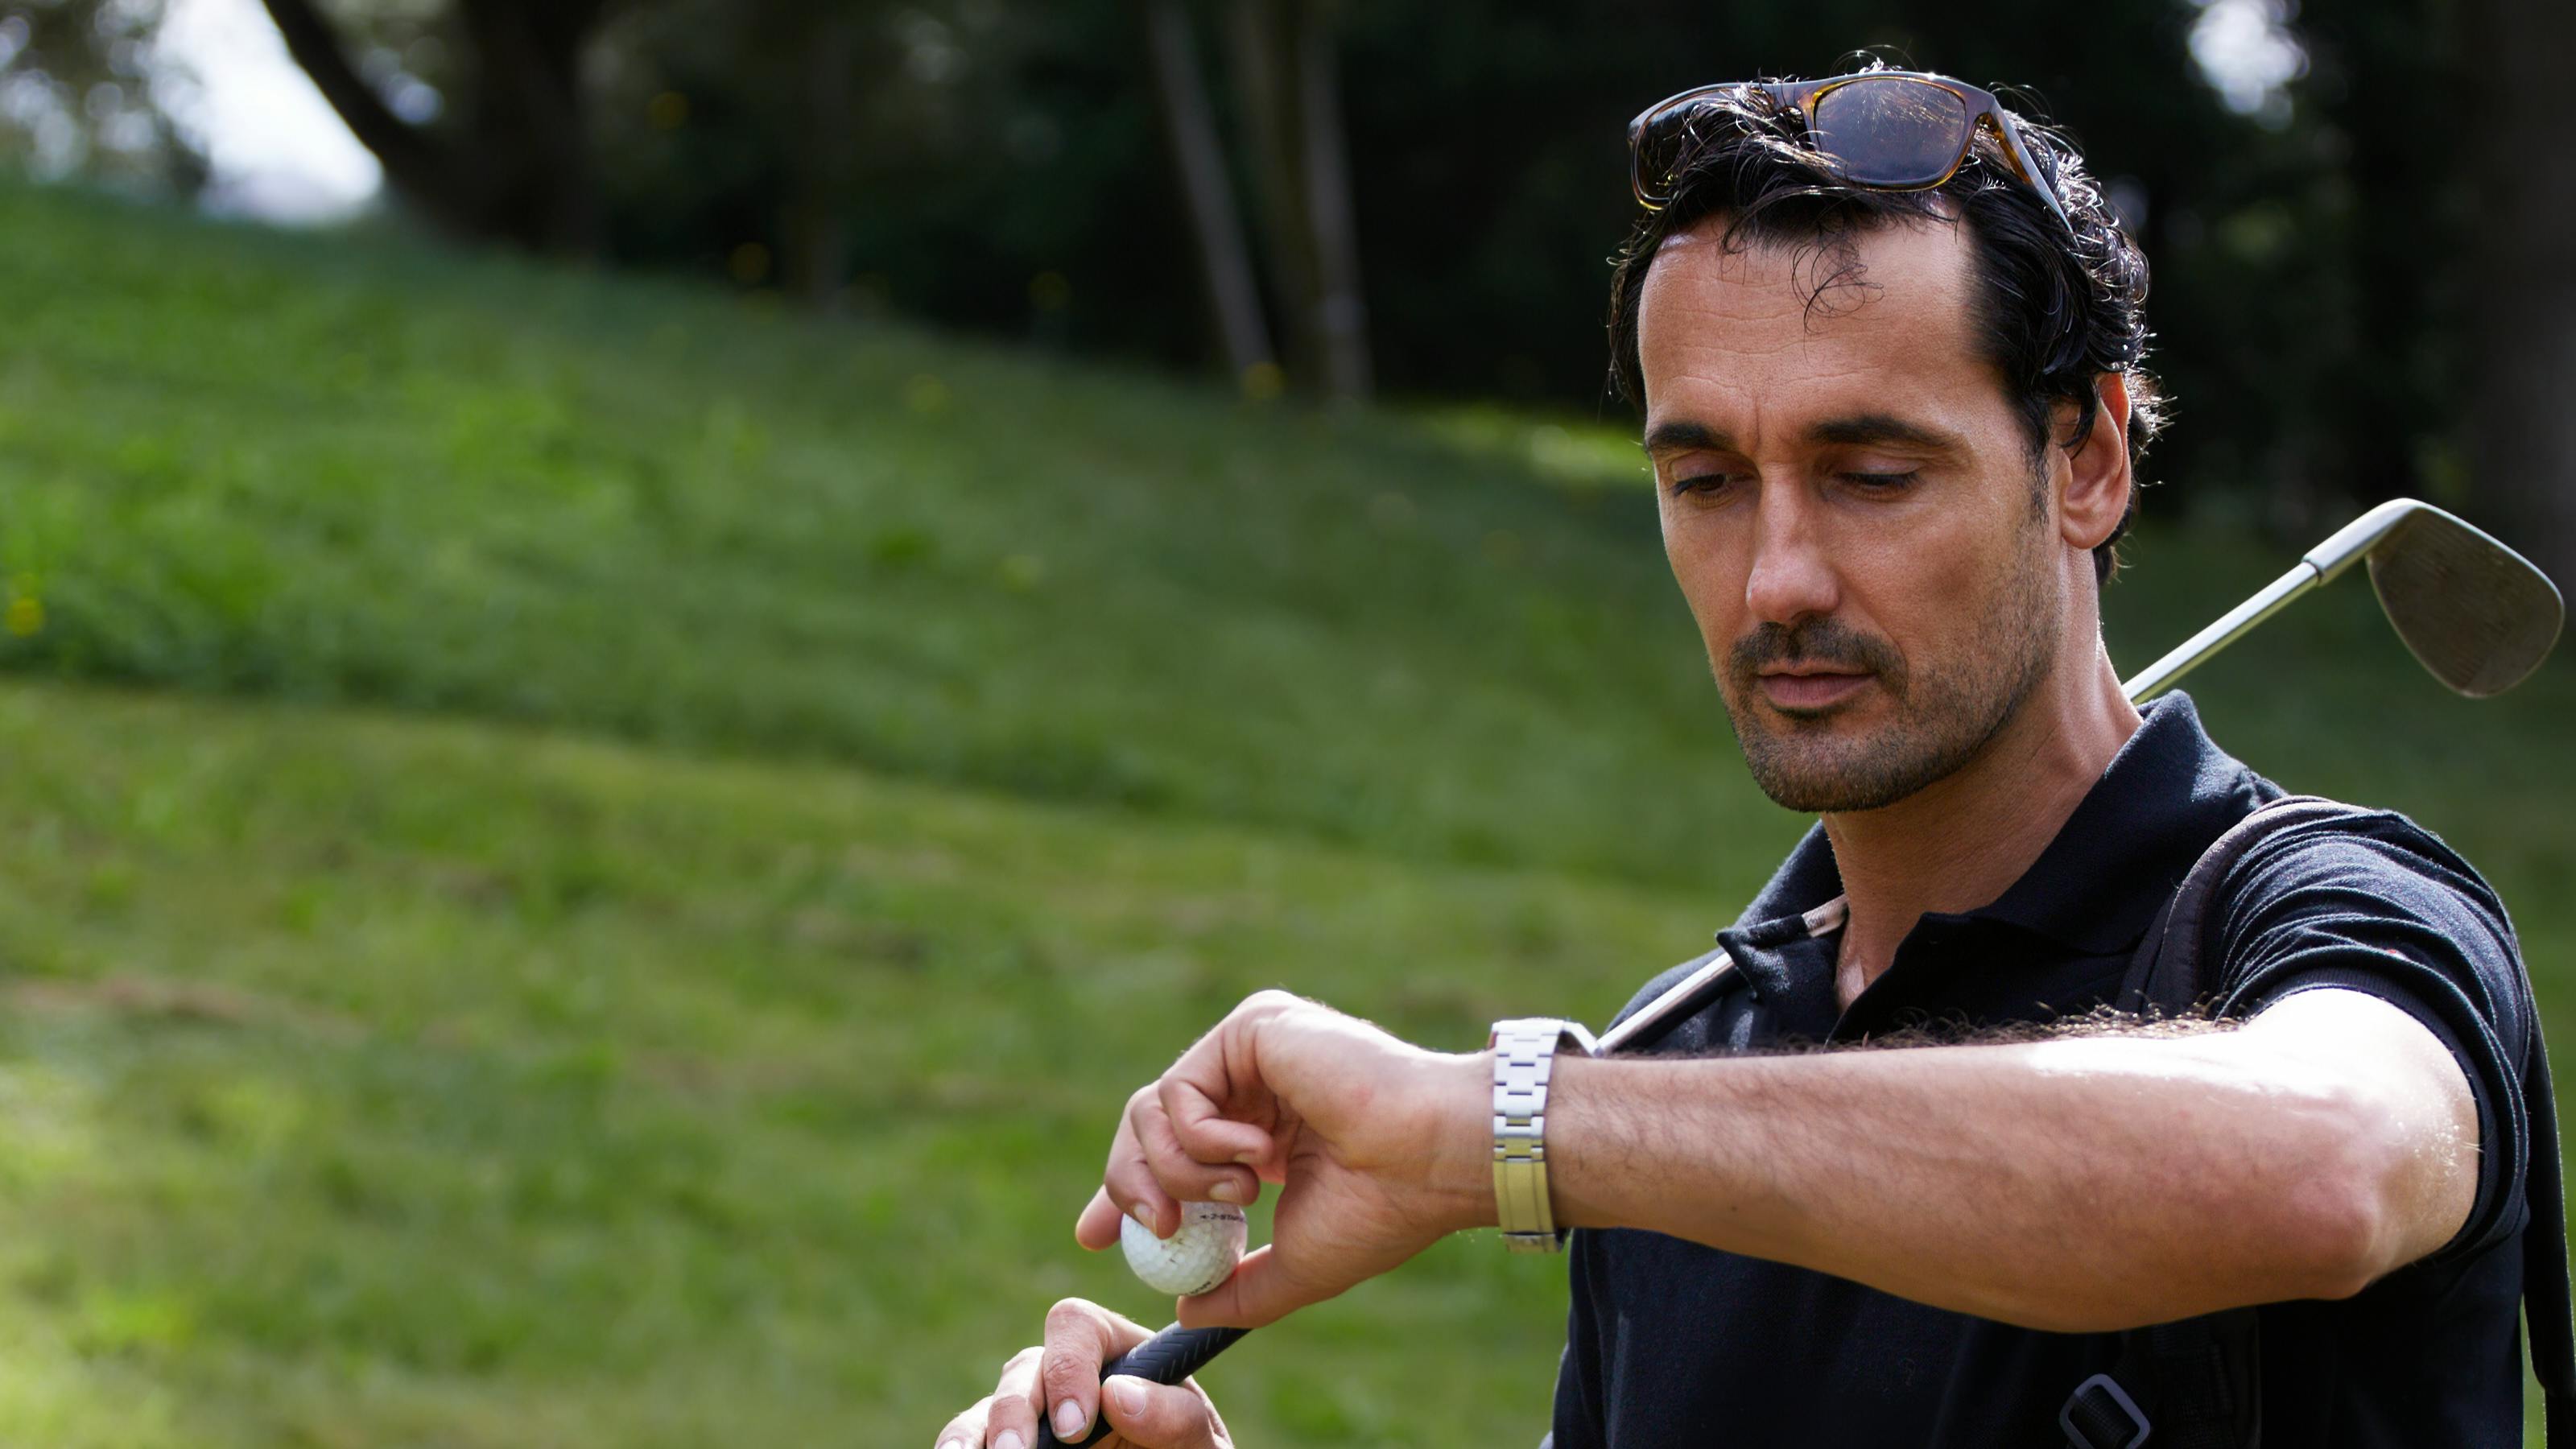 A golfer holding a club checks his watch. 